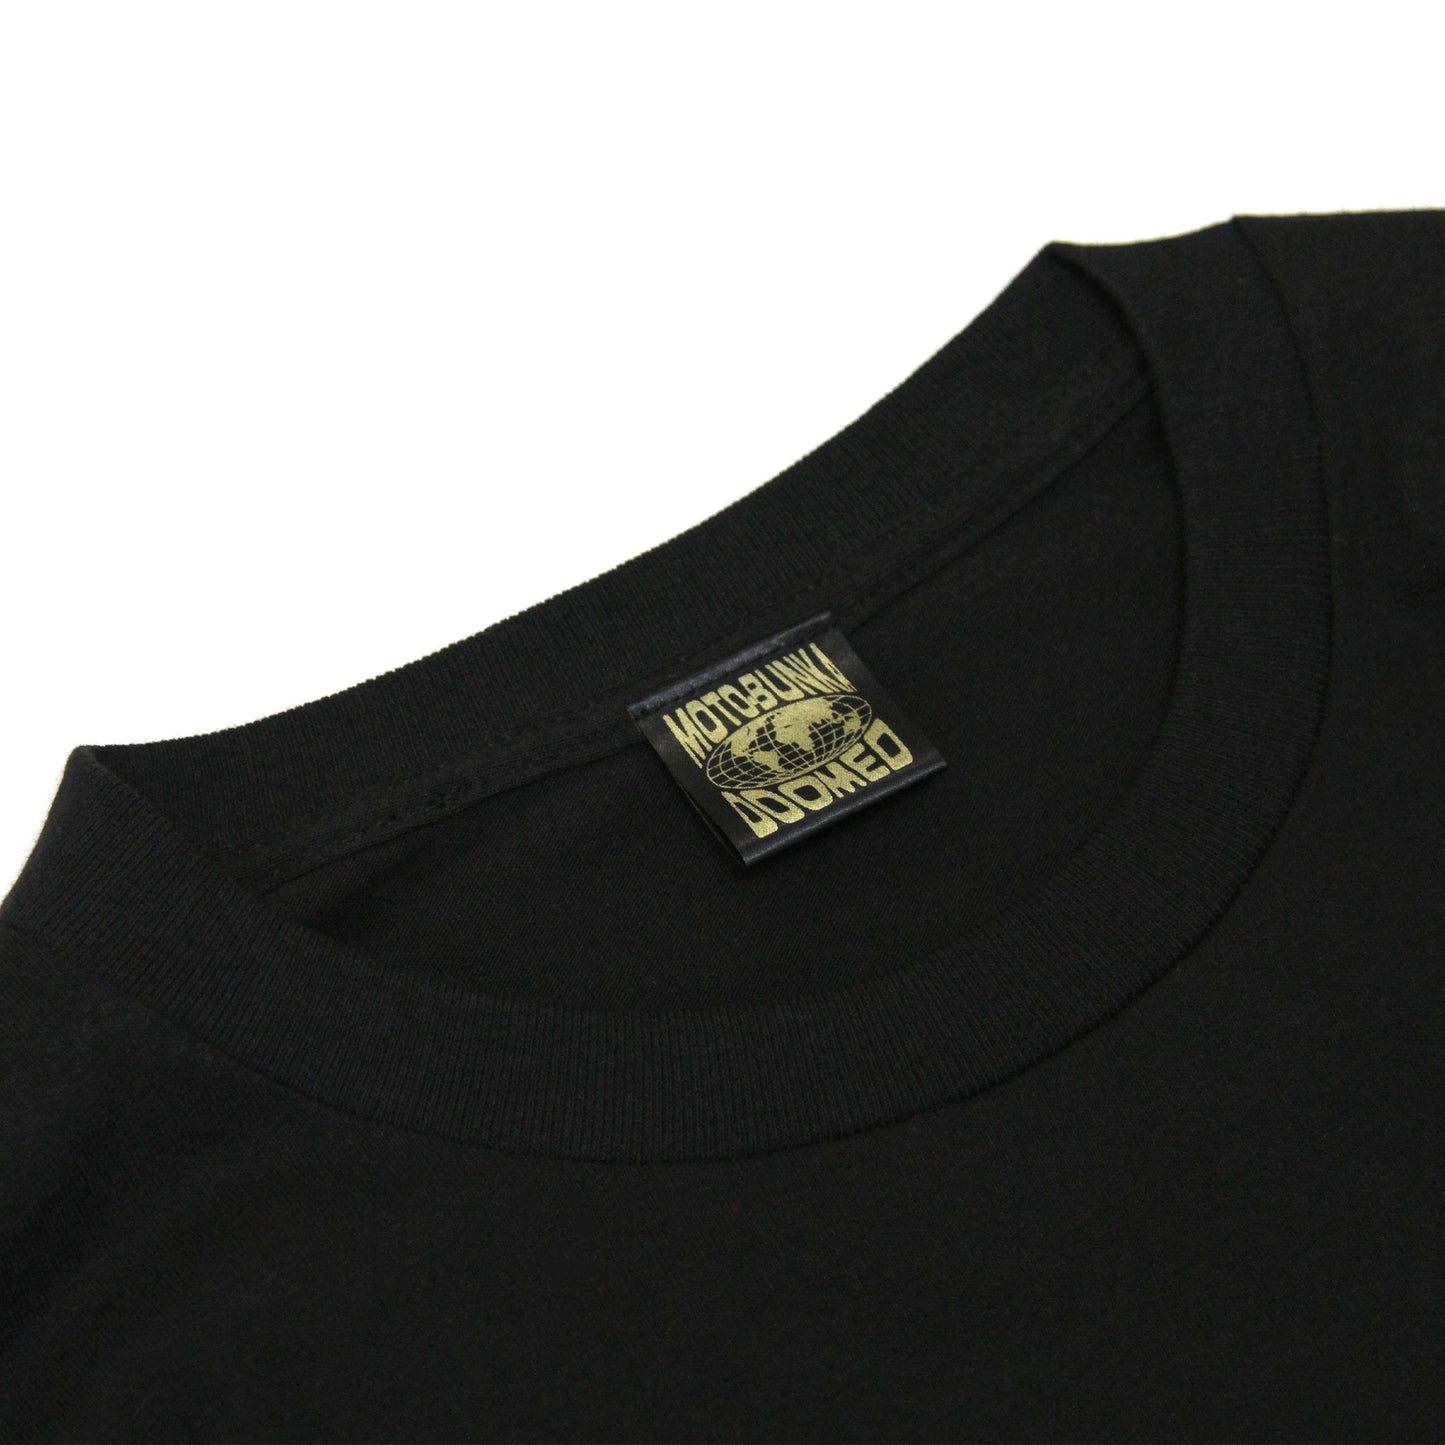 MOTO-BUNKA X DOOMED - Earth T-Shirt/Black